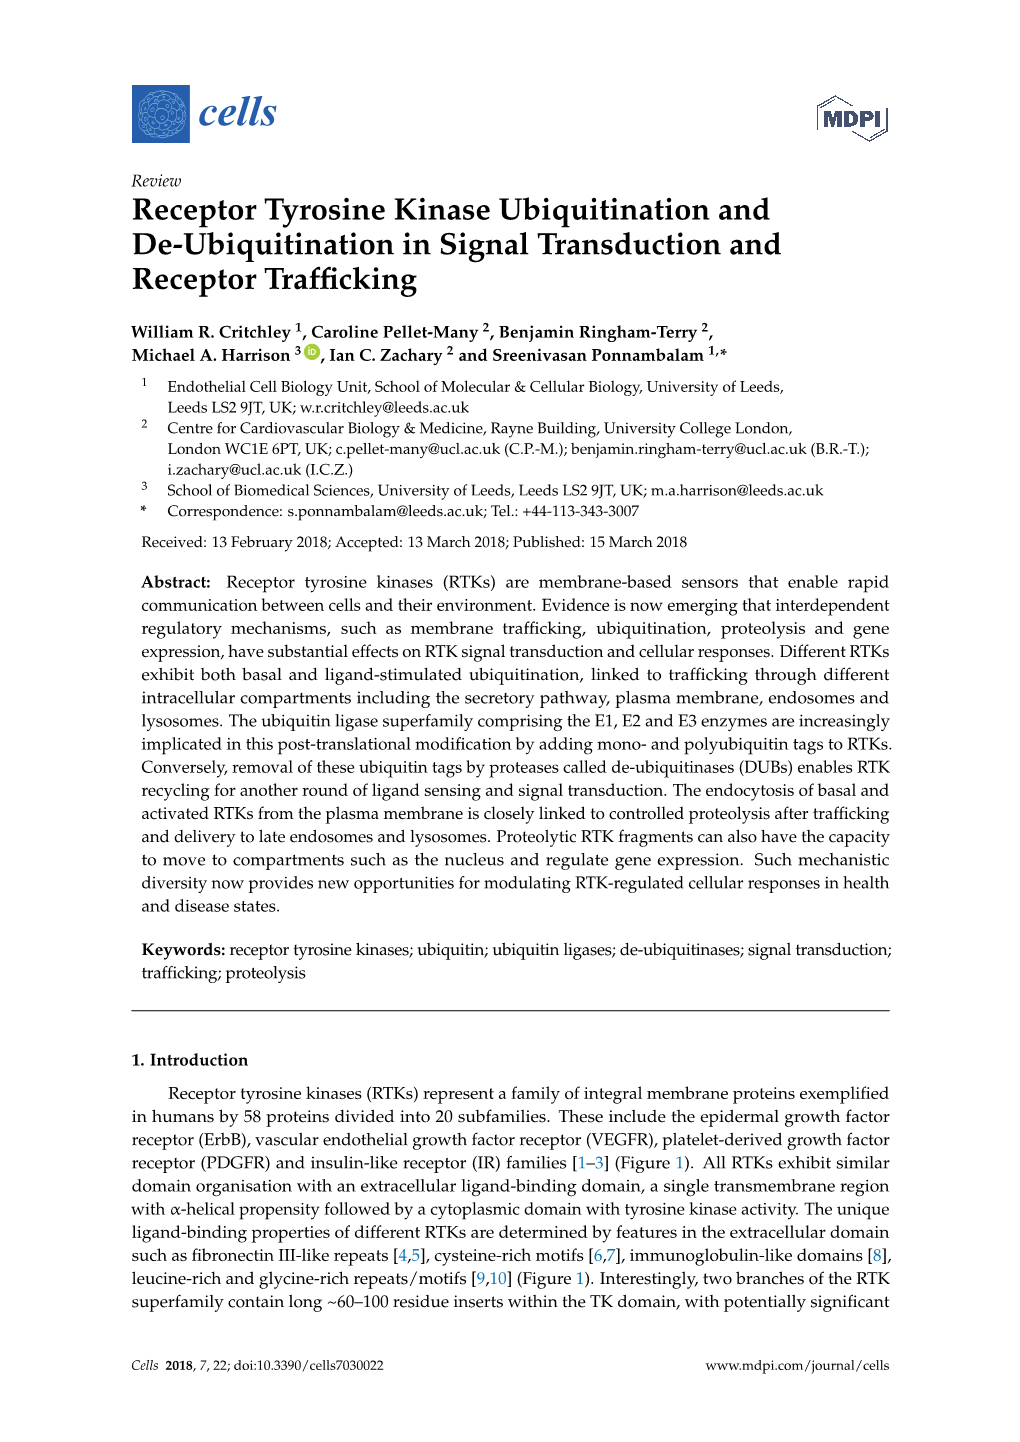 Receptor Tyrosine Kinase Ubiquitination and De-Ubiquitination in Signal Transduction and Receptor Trafﬁcking